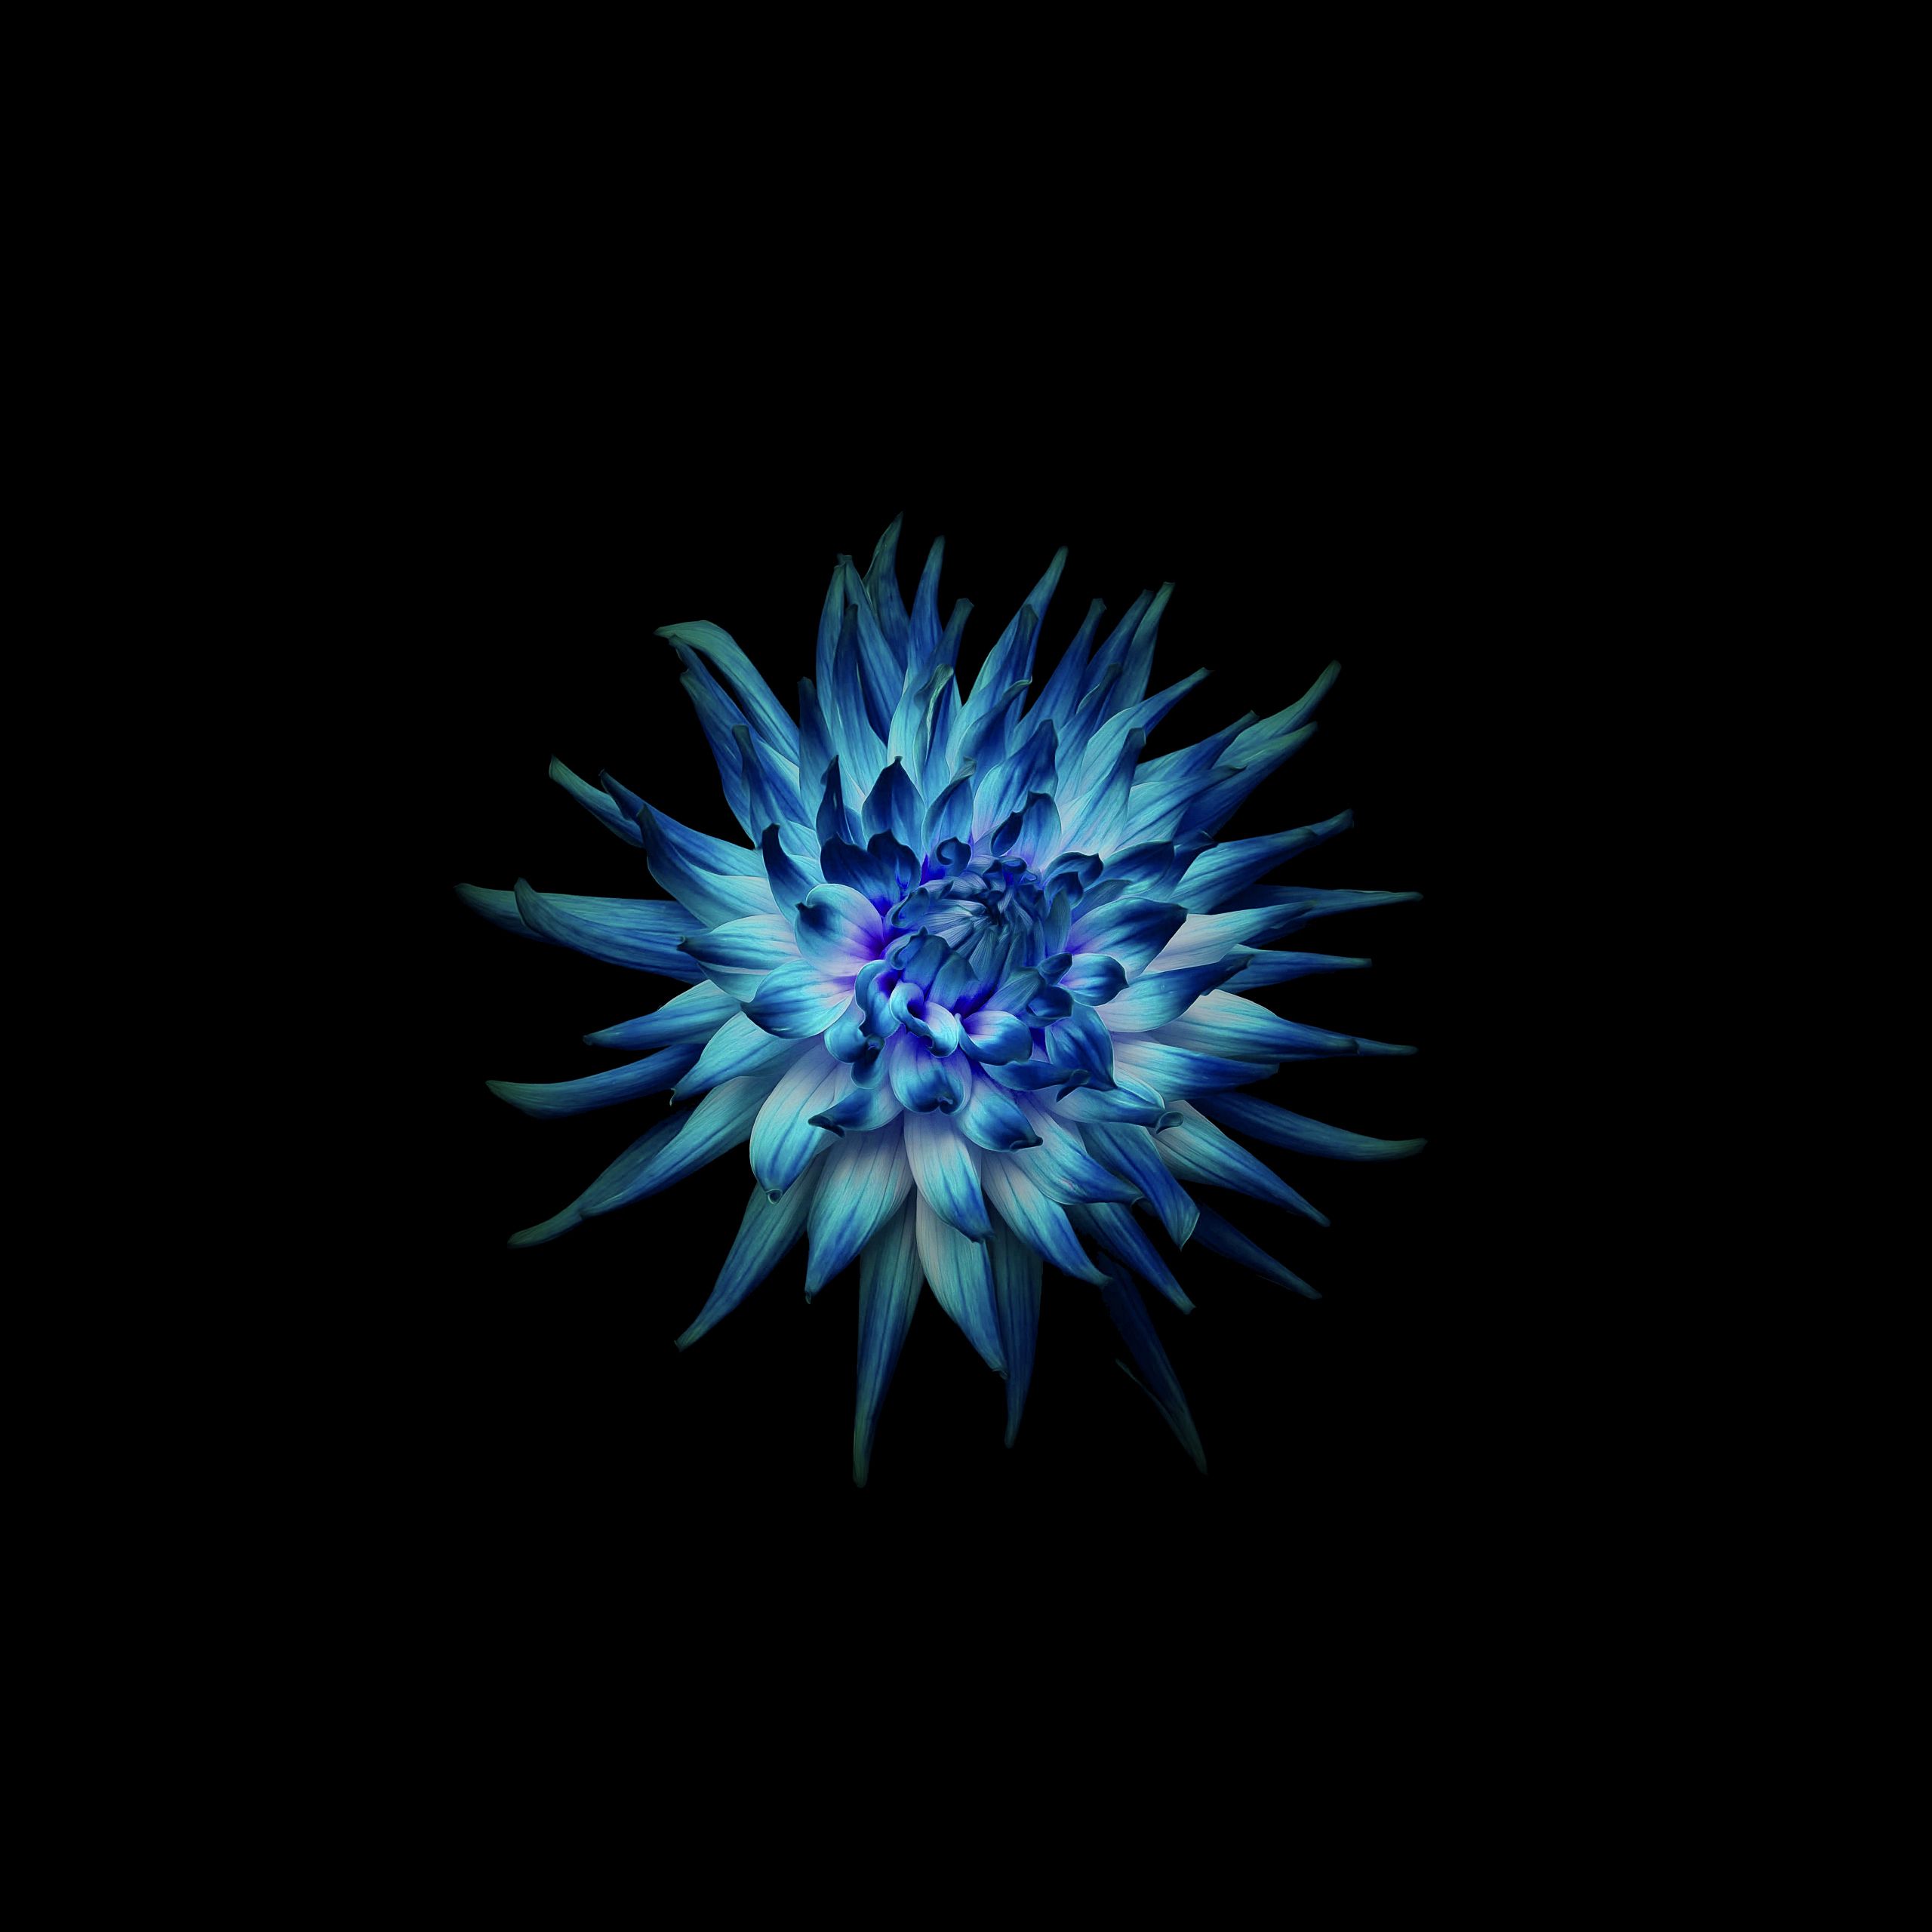 Wallpaper Blue flower, Dark background, Black, Huawei Mate 10